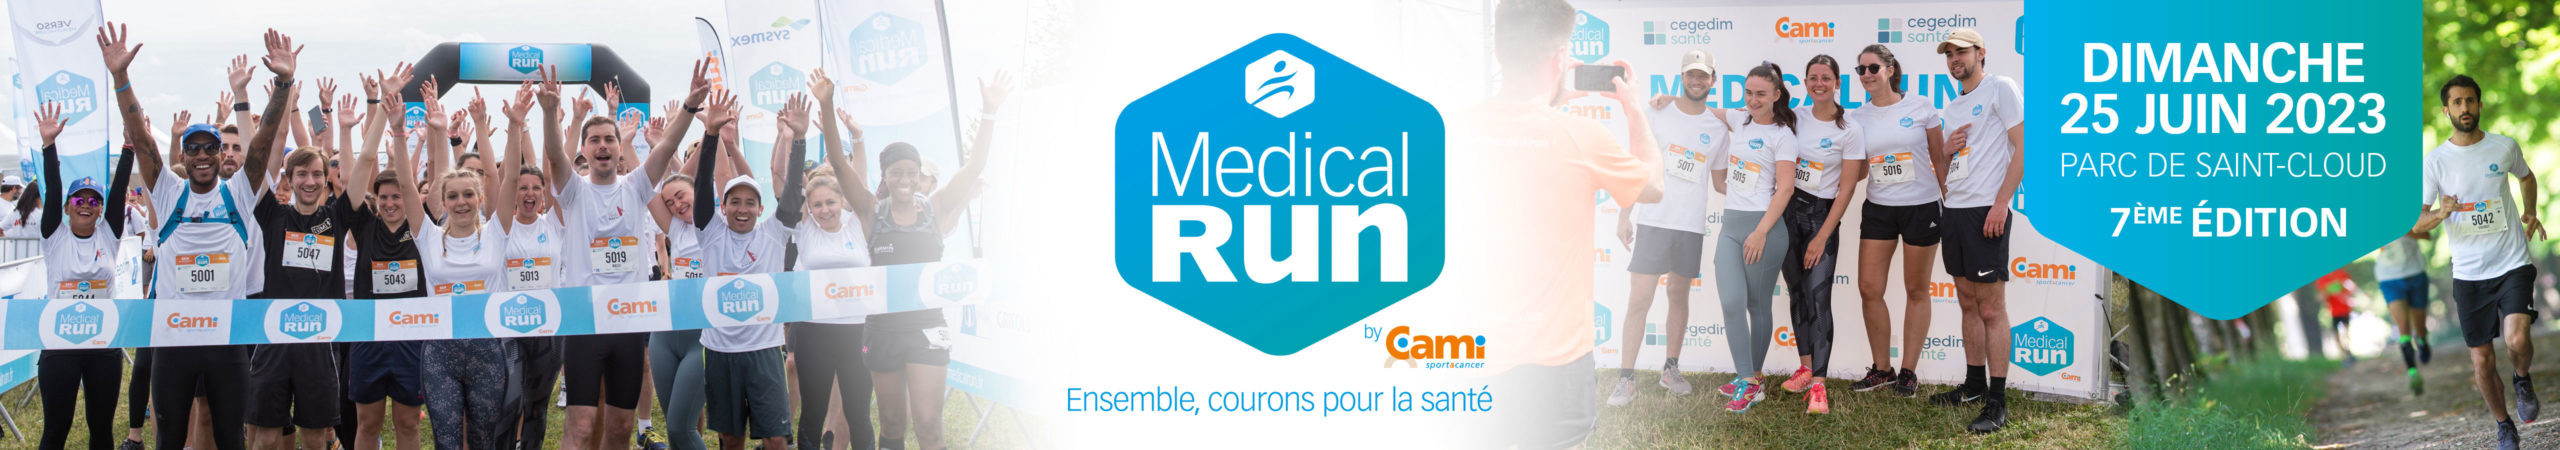 Medical Run - 7ème édition